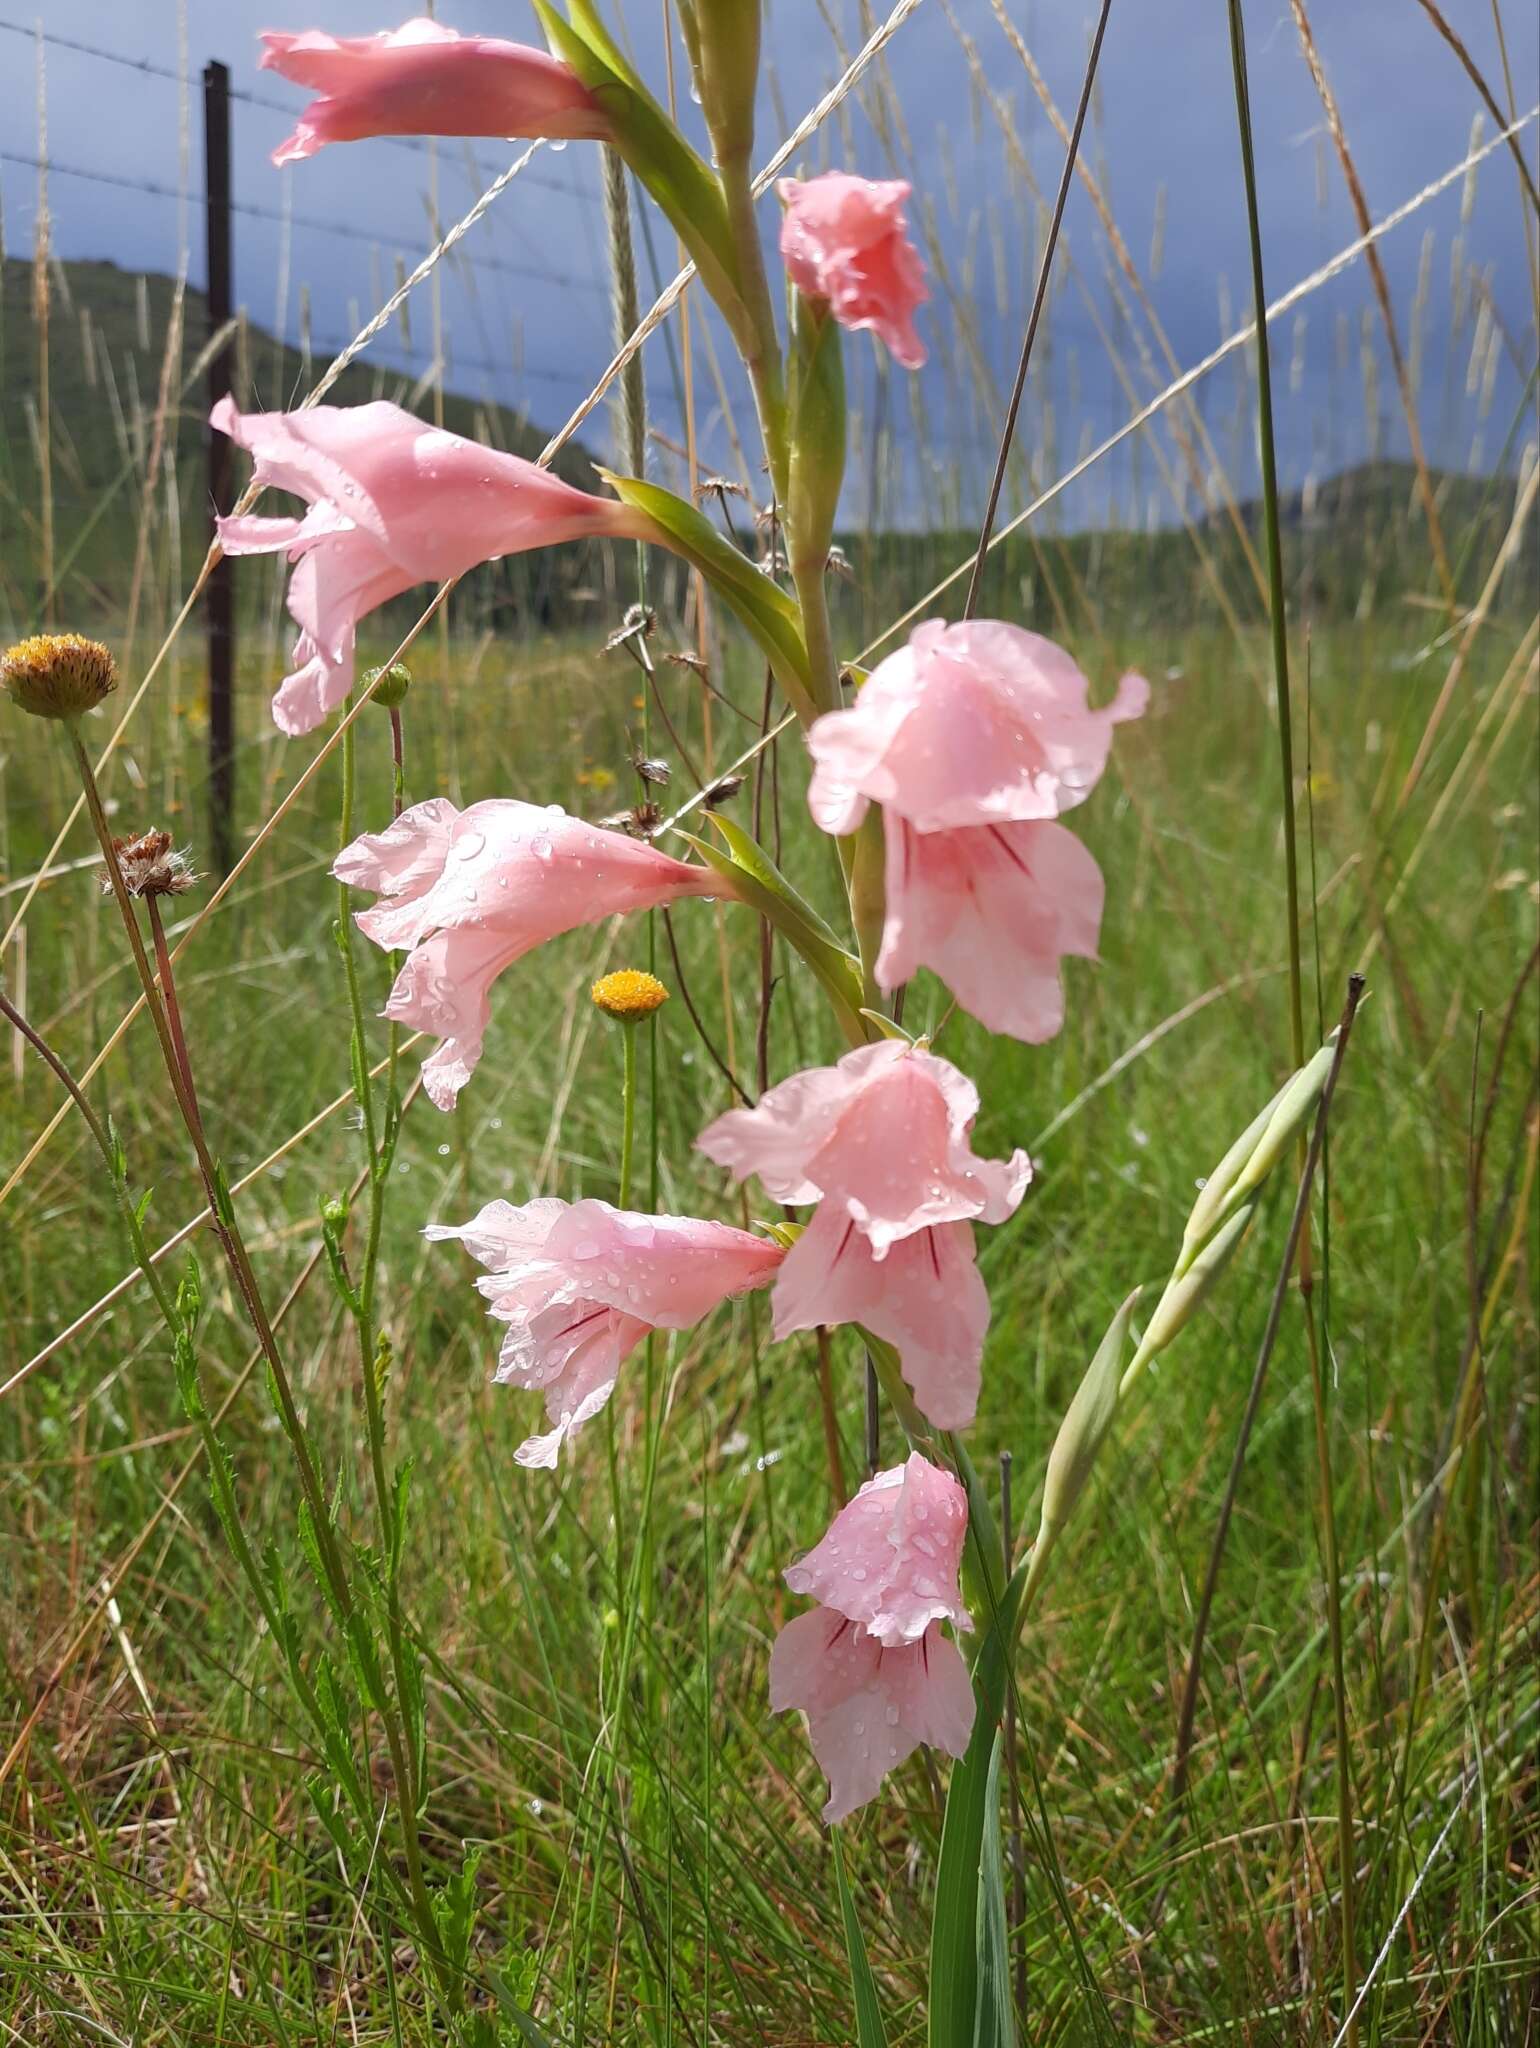 Imagem de Gladiolus oppositiflorus Herb.